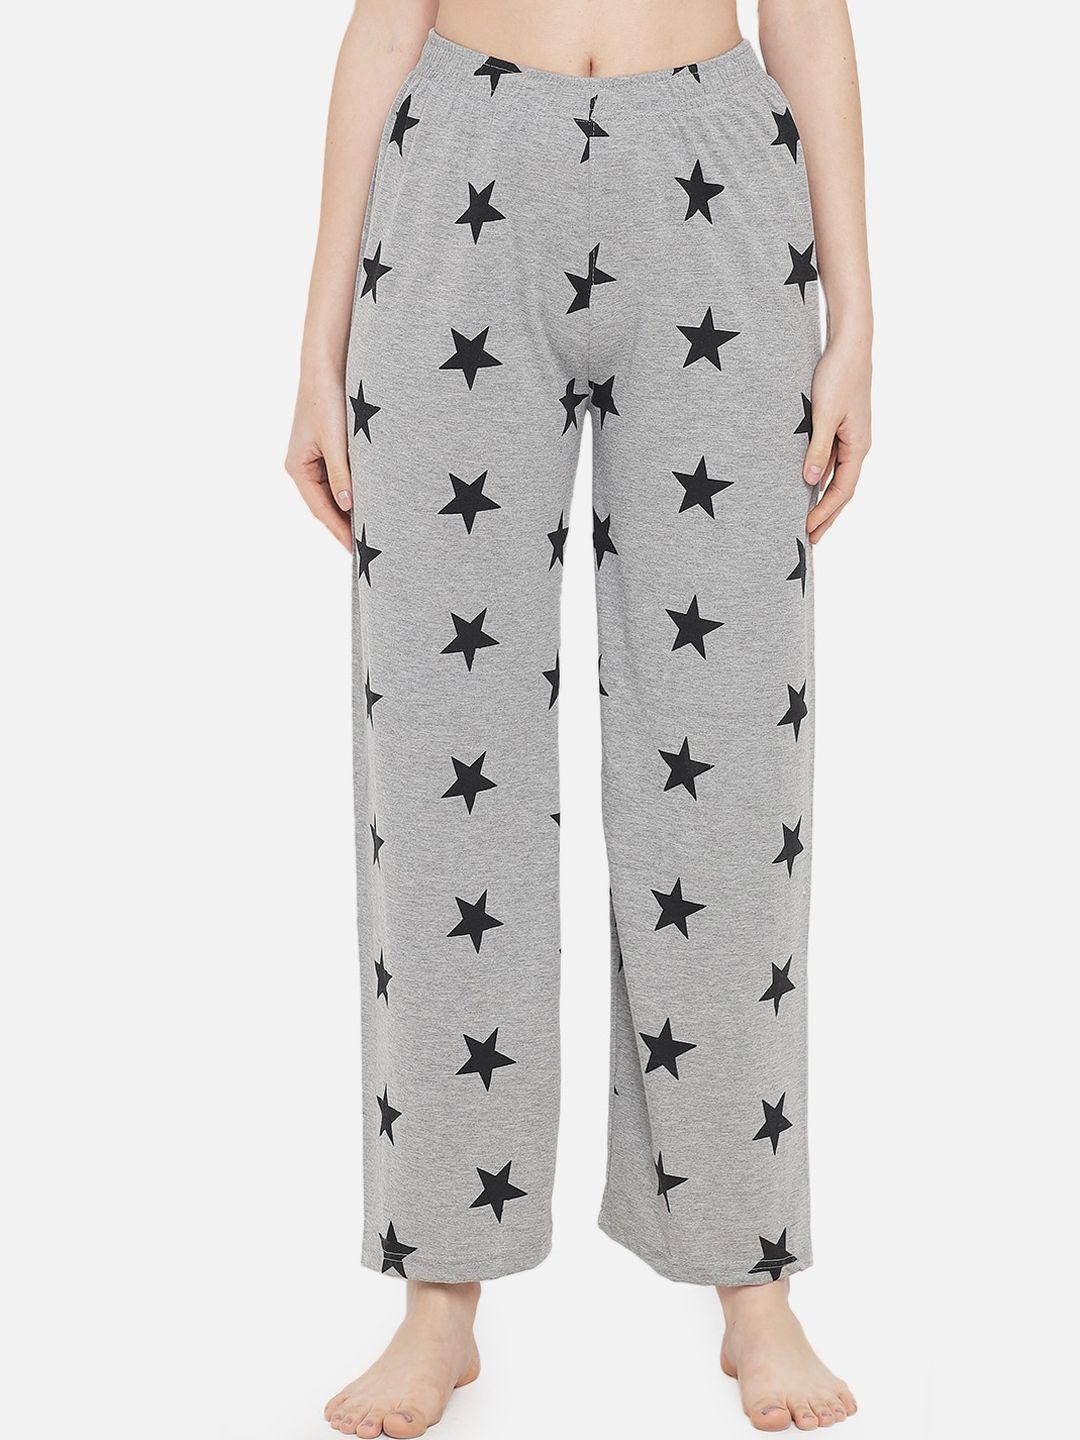 fflirtygo-women-grey-&-black-star-printed-pyjamas